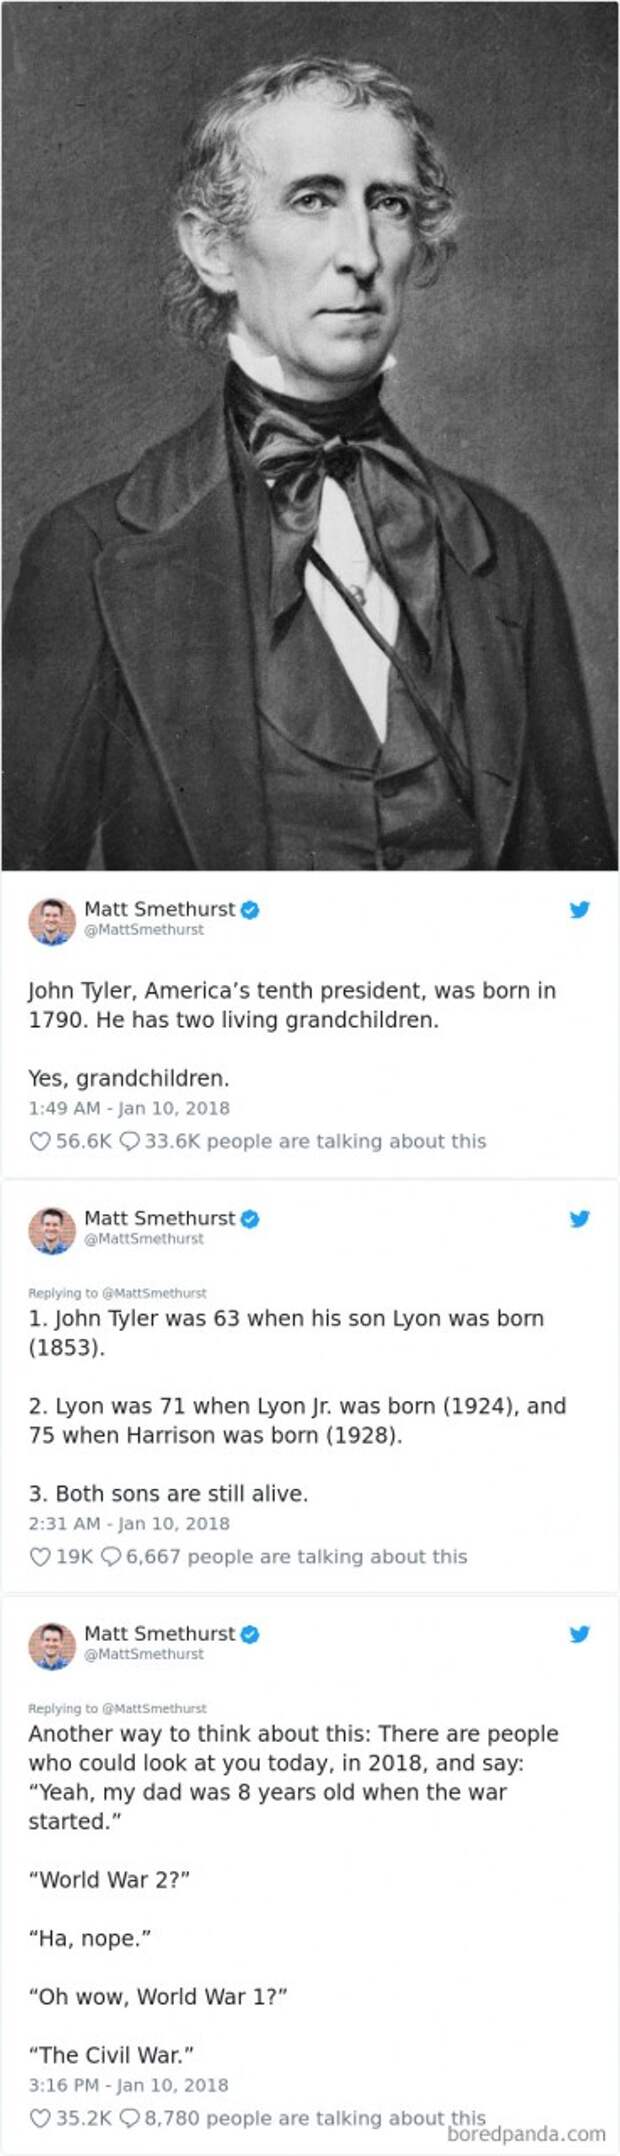 John Tyler, America's Tenth President, Was Born In 1790. He Has Two Living Grandchildren. So This Means...